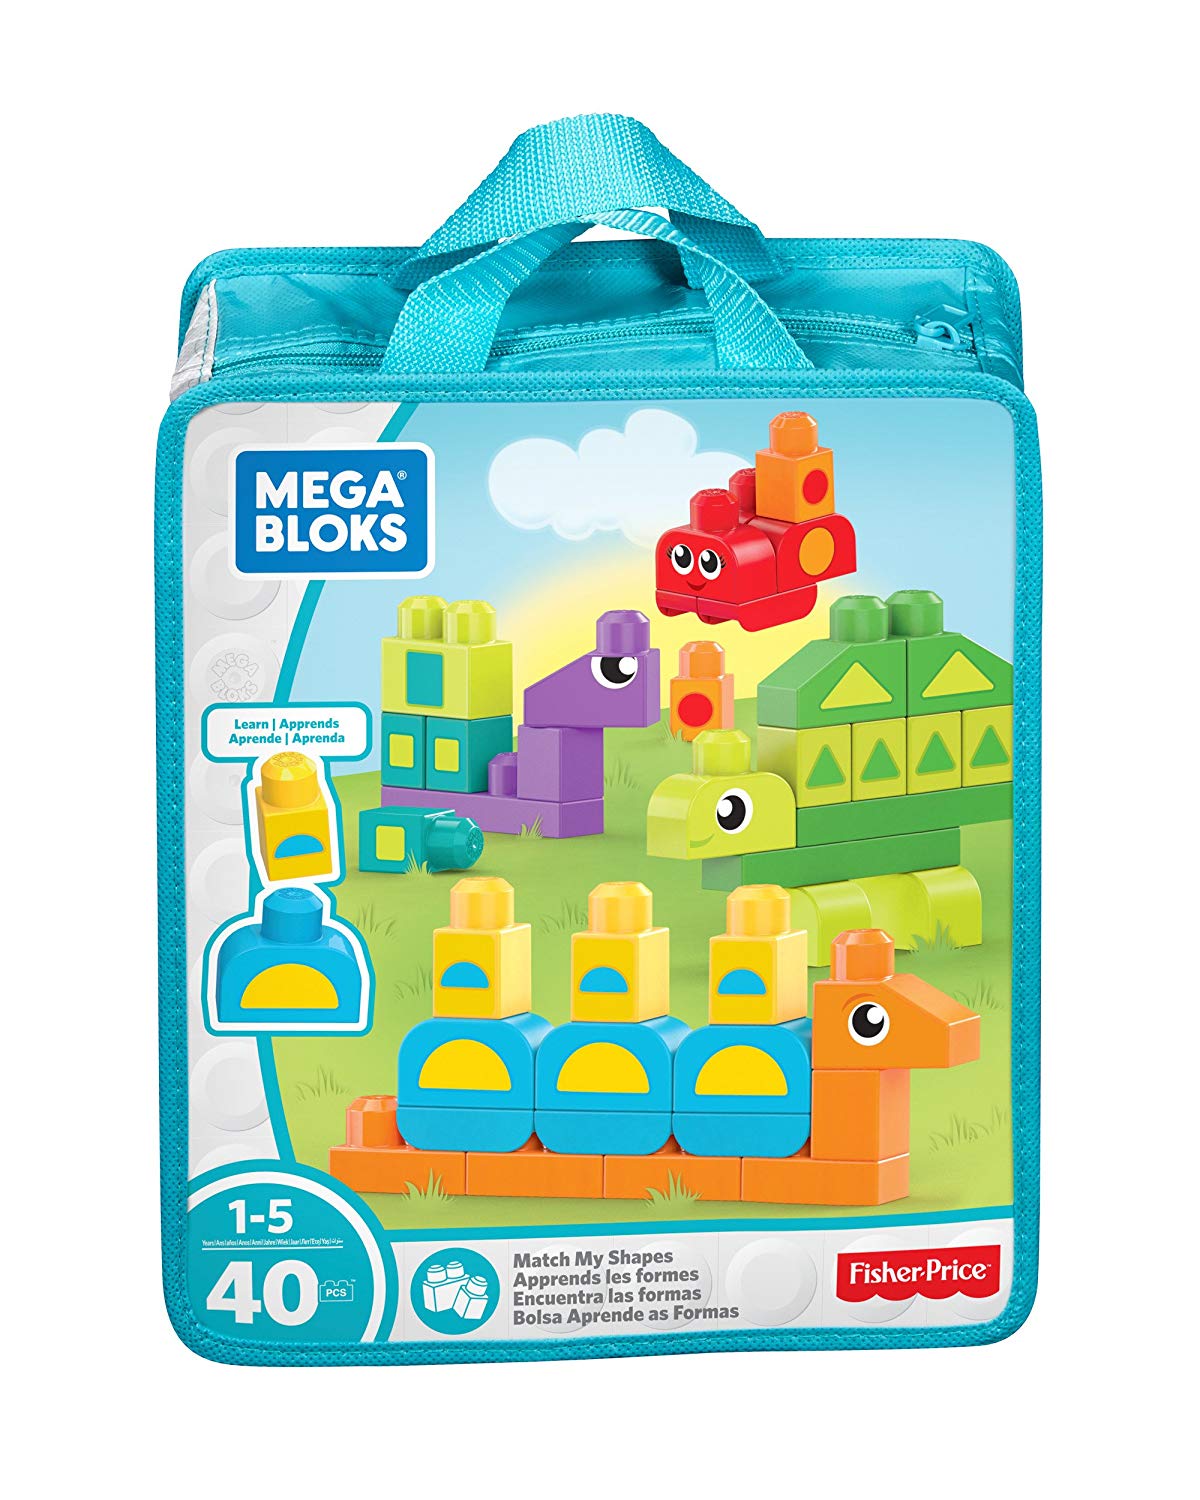 Mega Bloks Dxh34 Theme Animal Shapes Building Mattel Preschool Construction